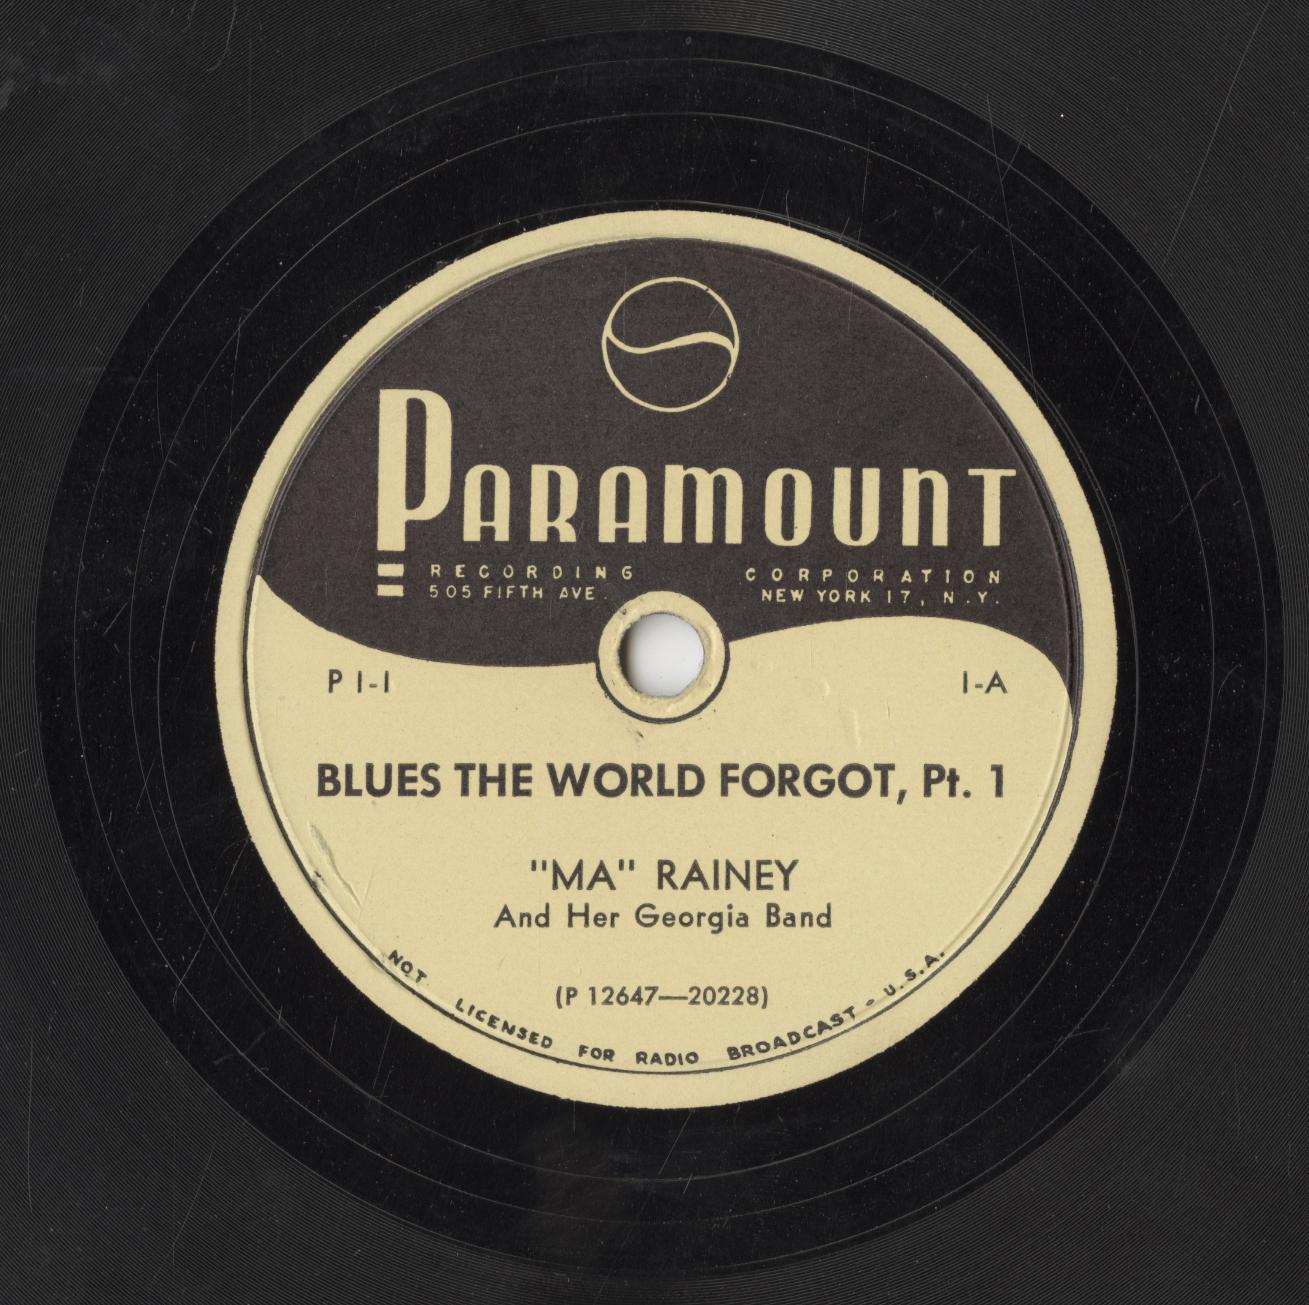 Blues the world forgot, pt. 1